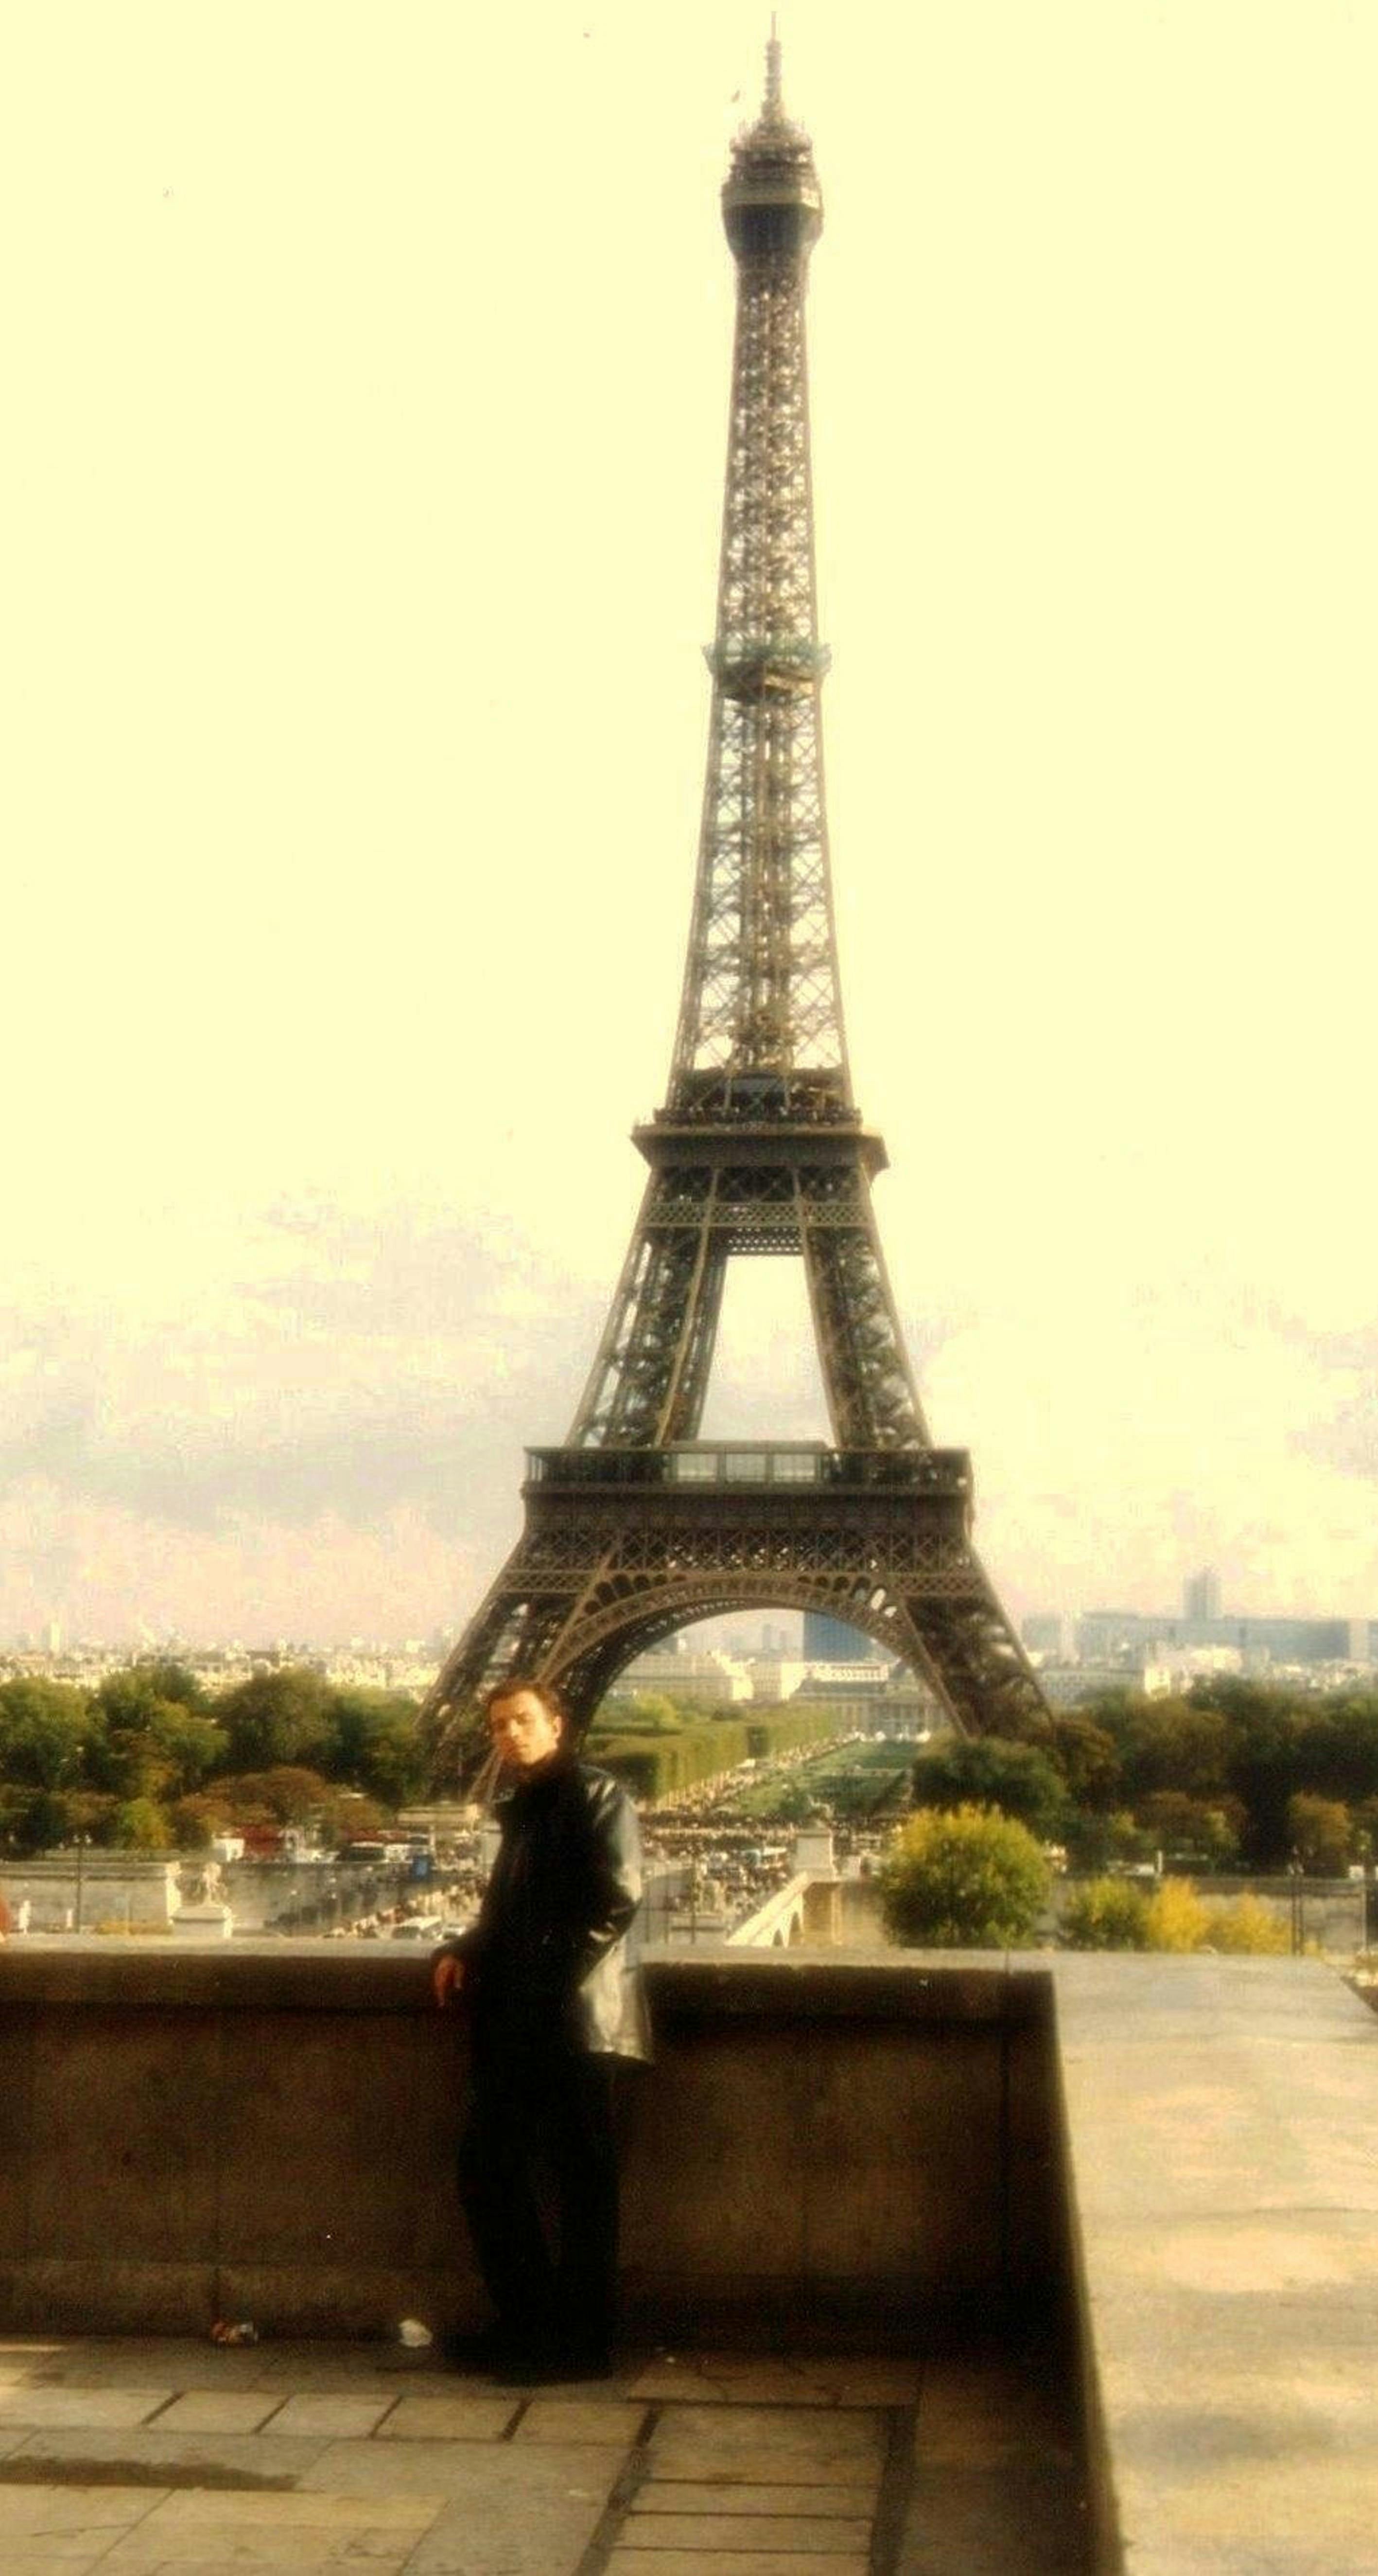 Free stock photo of eiffel tower, france, paris